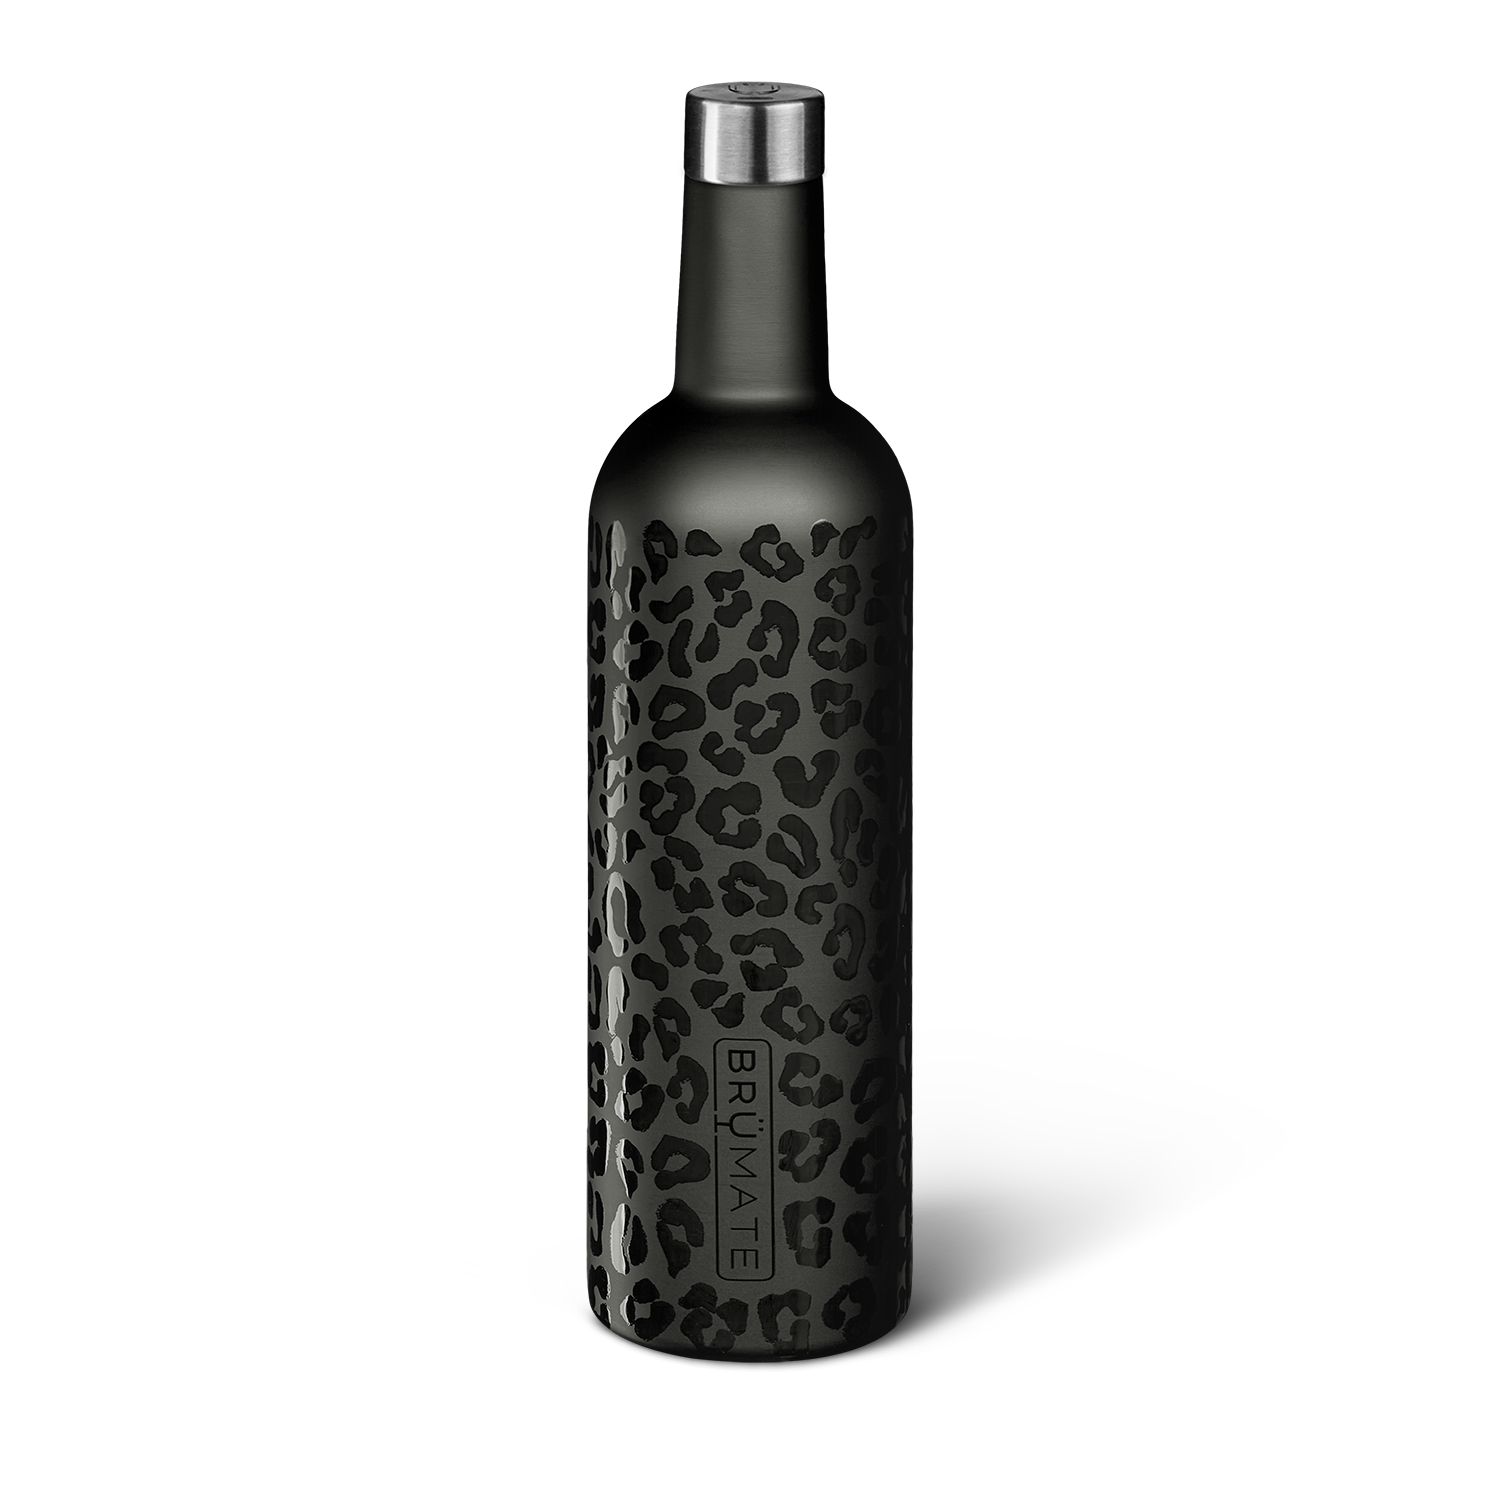 Brumate WINESULATOR 250Z WINE CANTEEN Fits Bottle Of Wine In